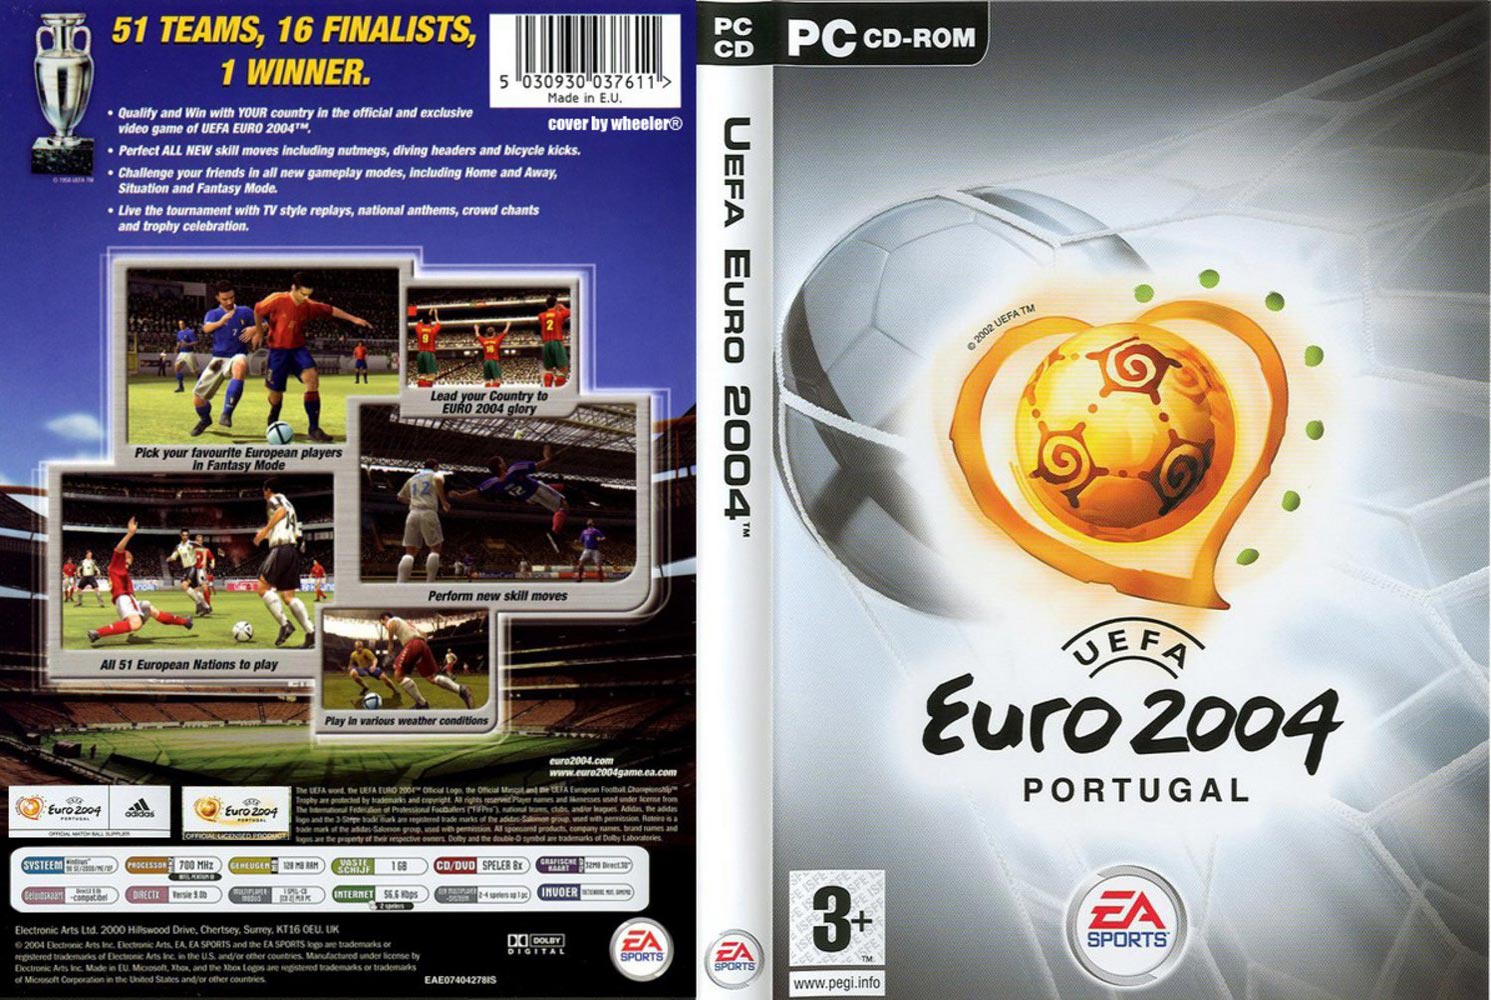 UEFA Euro 2004 Portugal - DVD obal